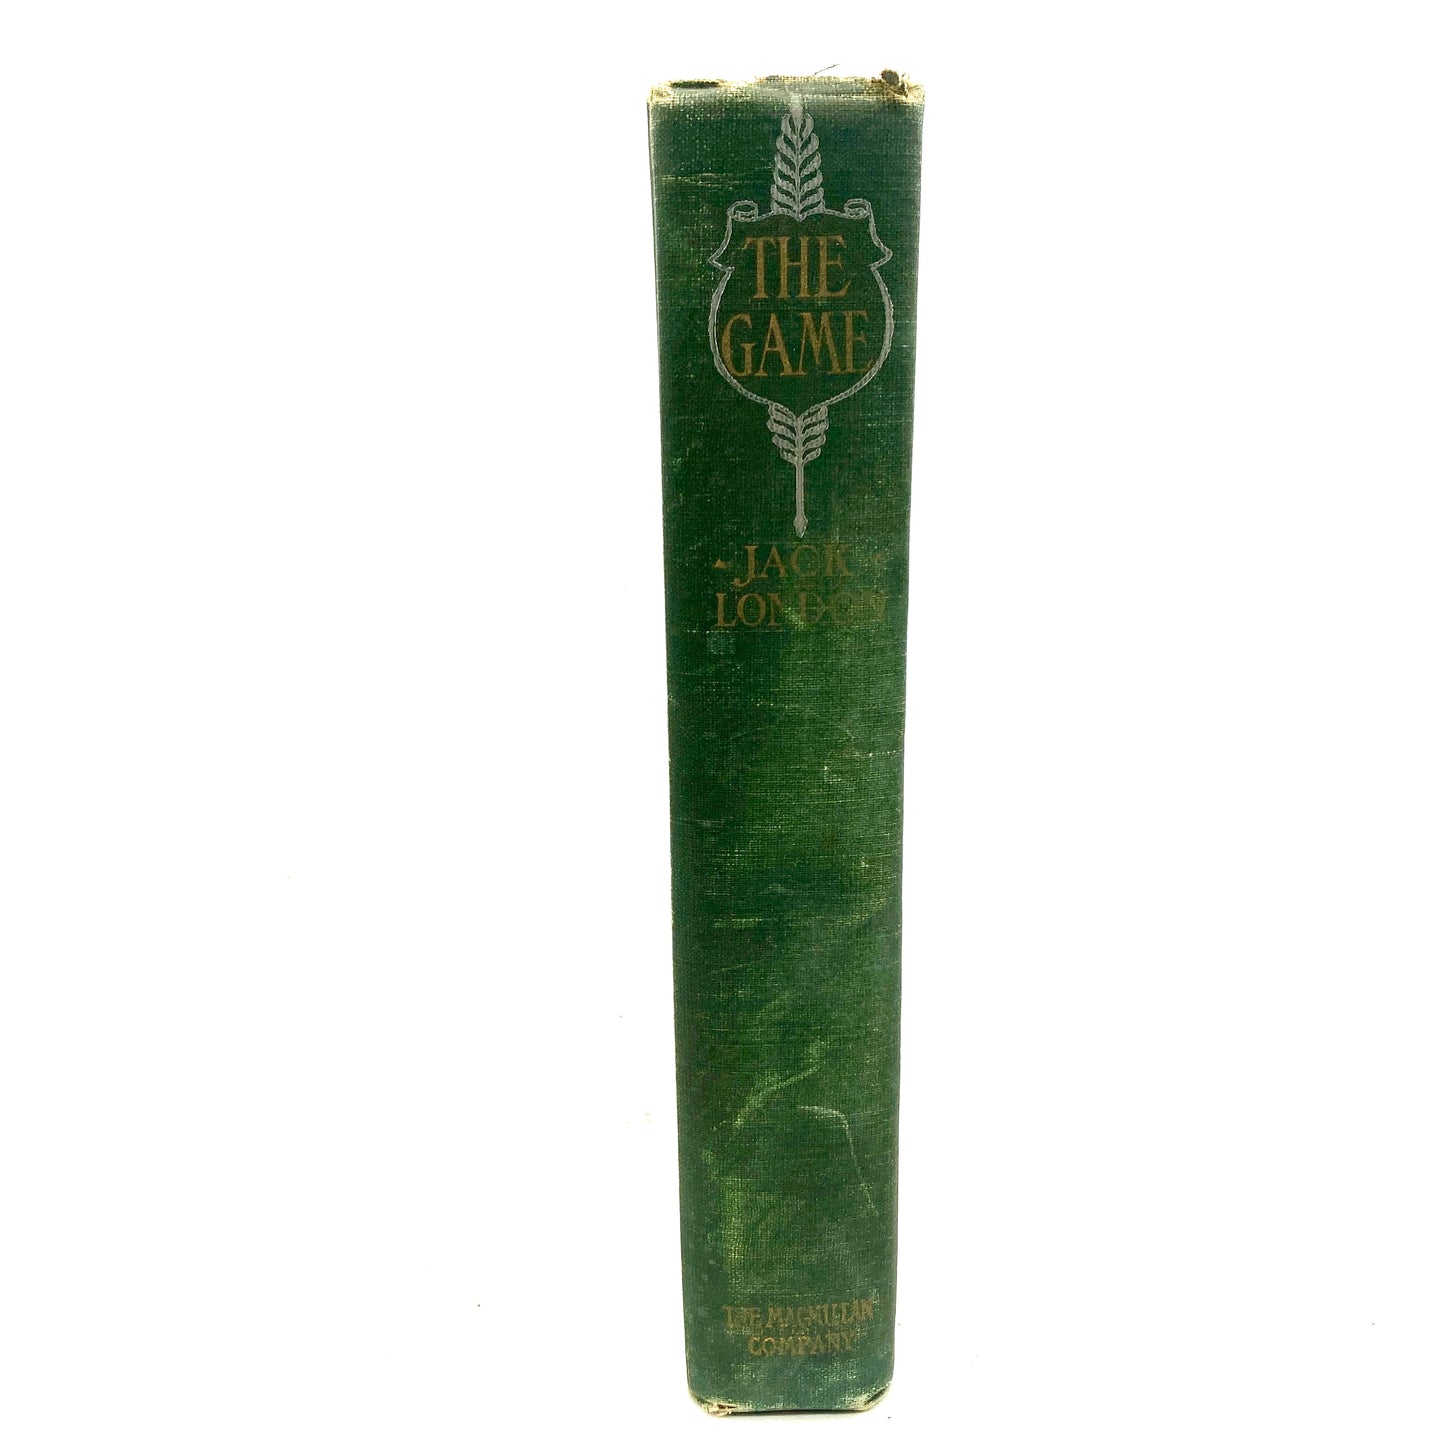 LONDON, Jack "The Game" [Macmillan, 1905] 1st Edition